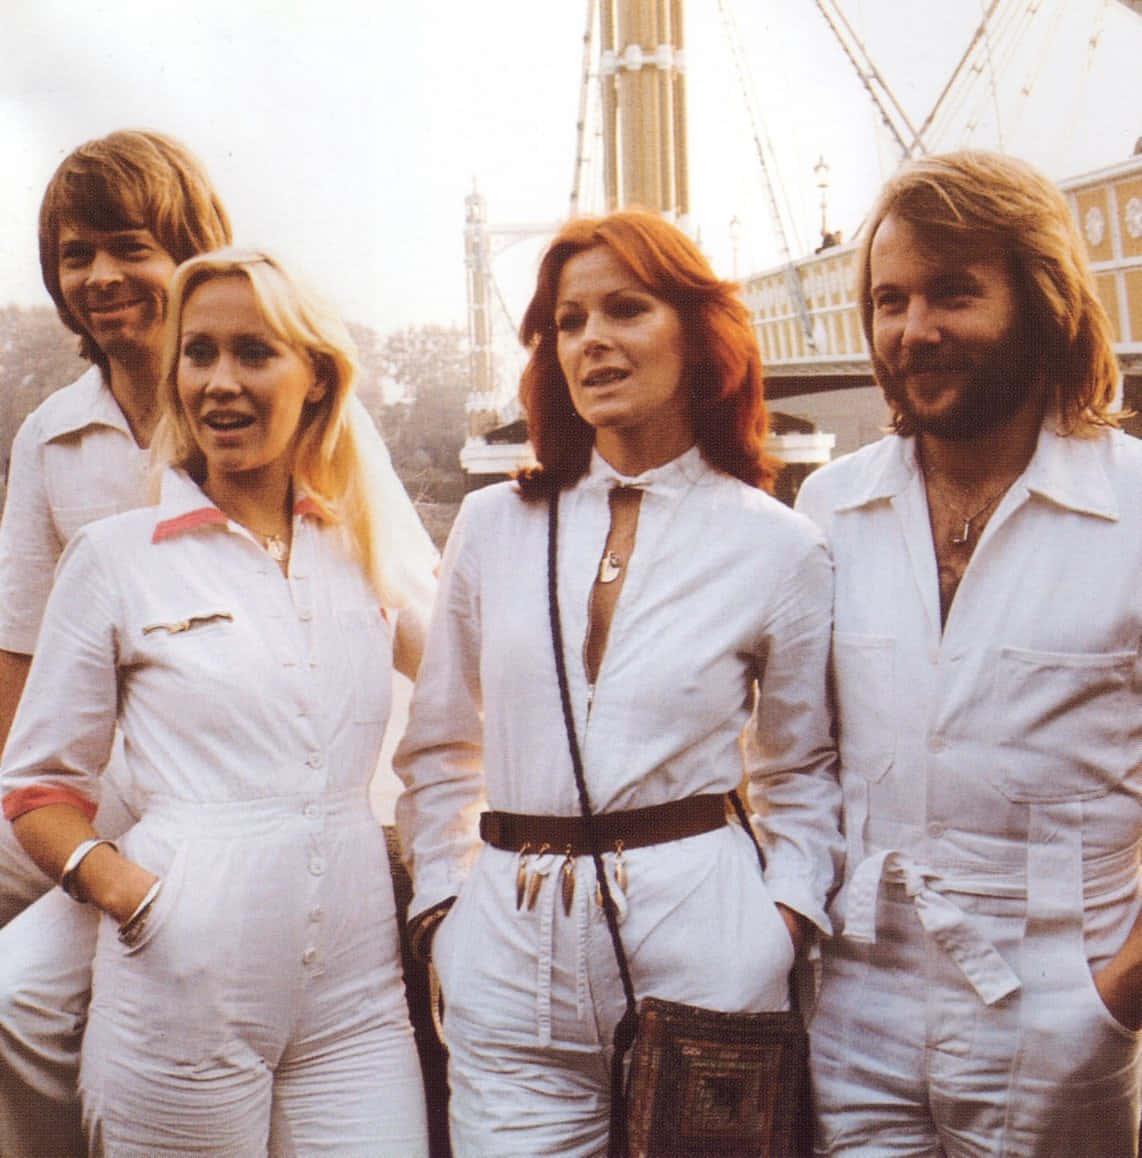 Group Photo of the Iconic Swedish Band ABBA